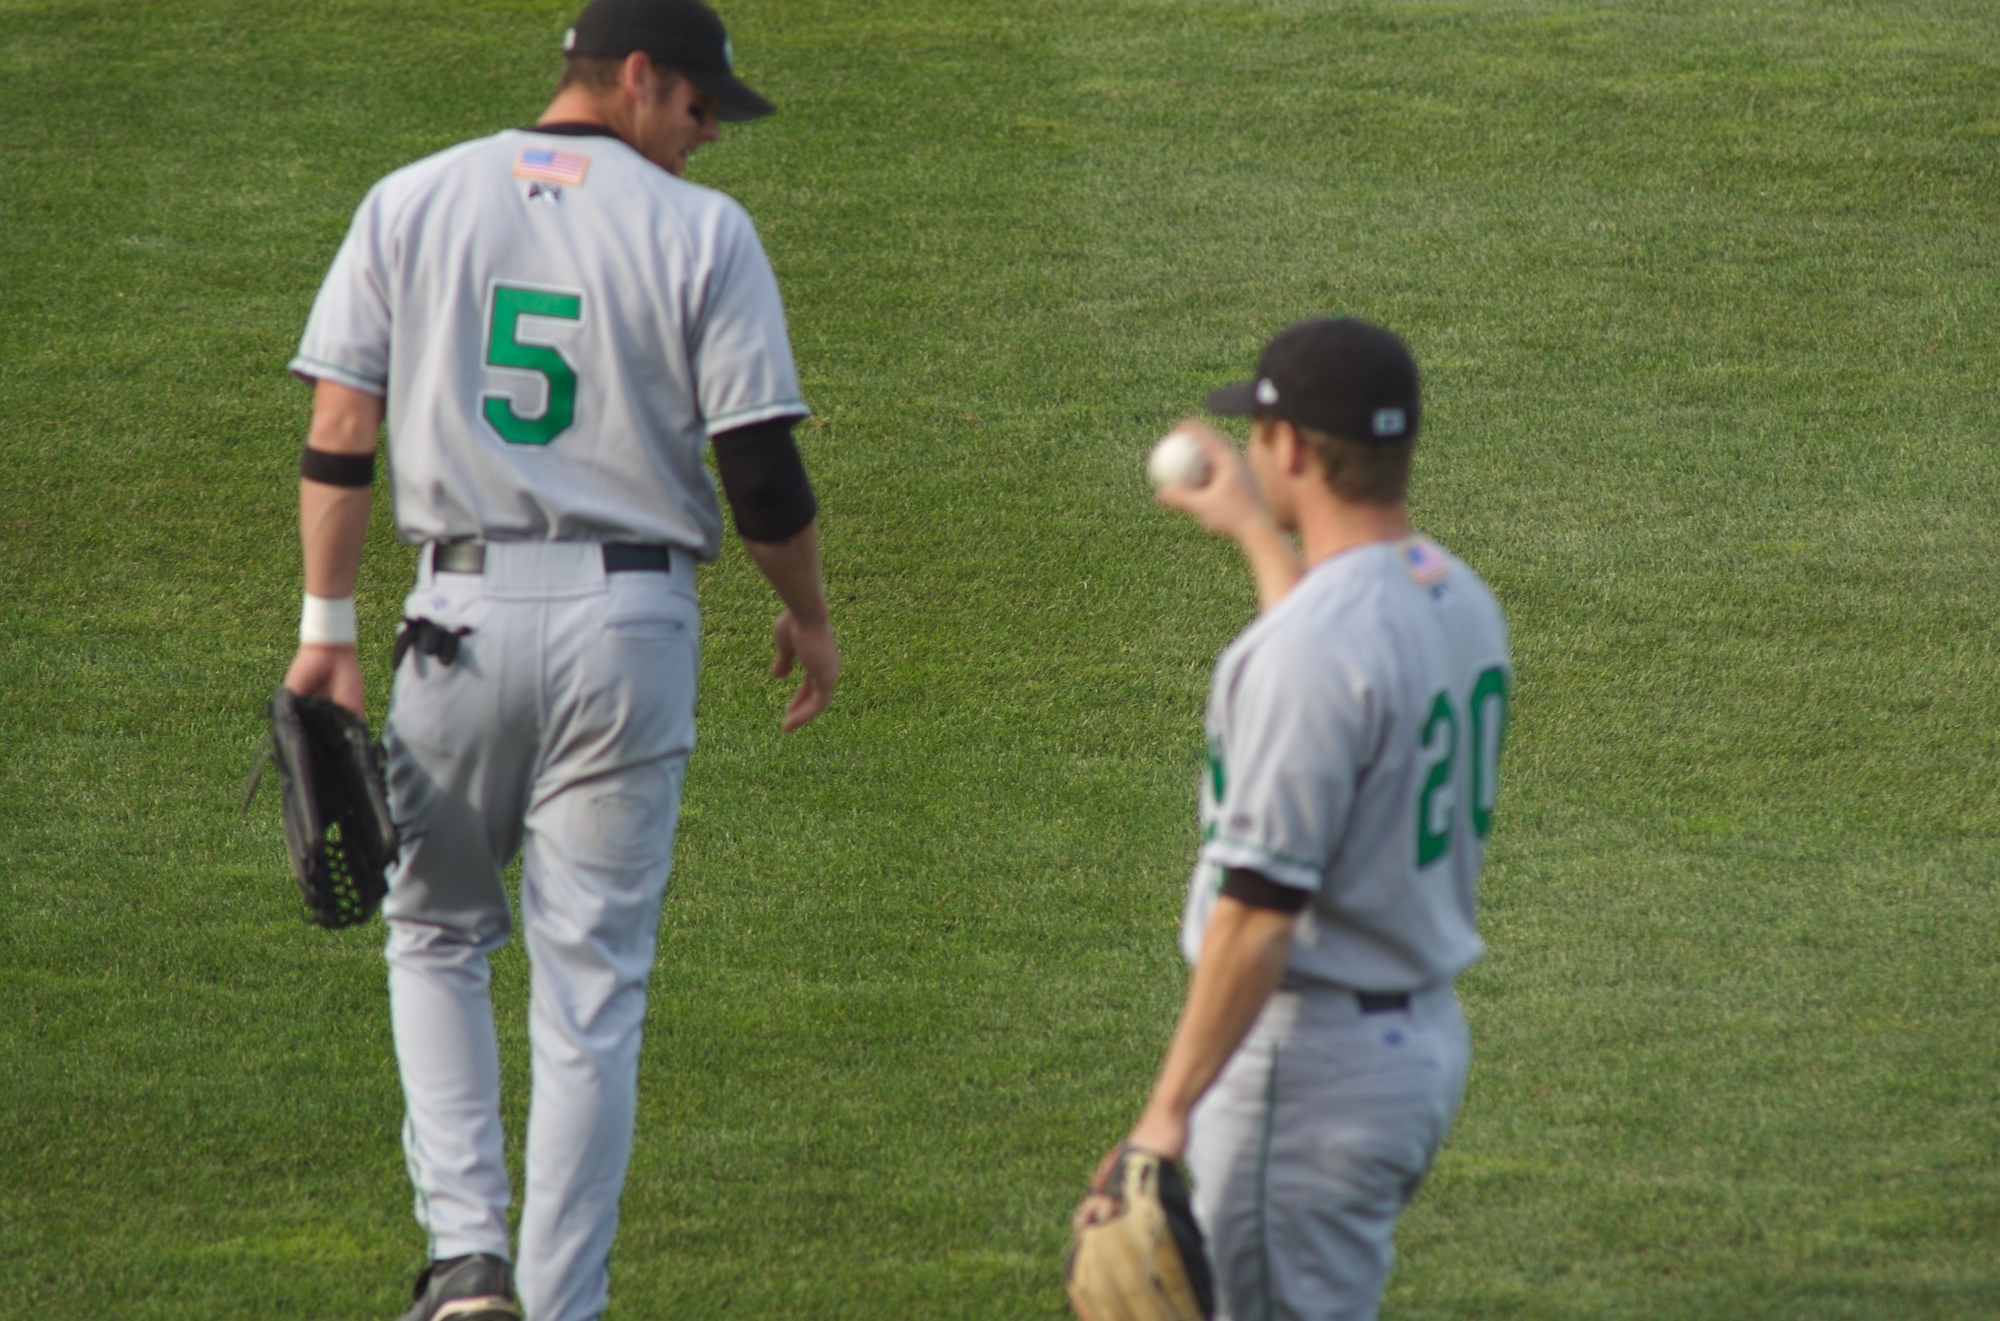 two baseball players standing on a baseball field